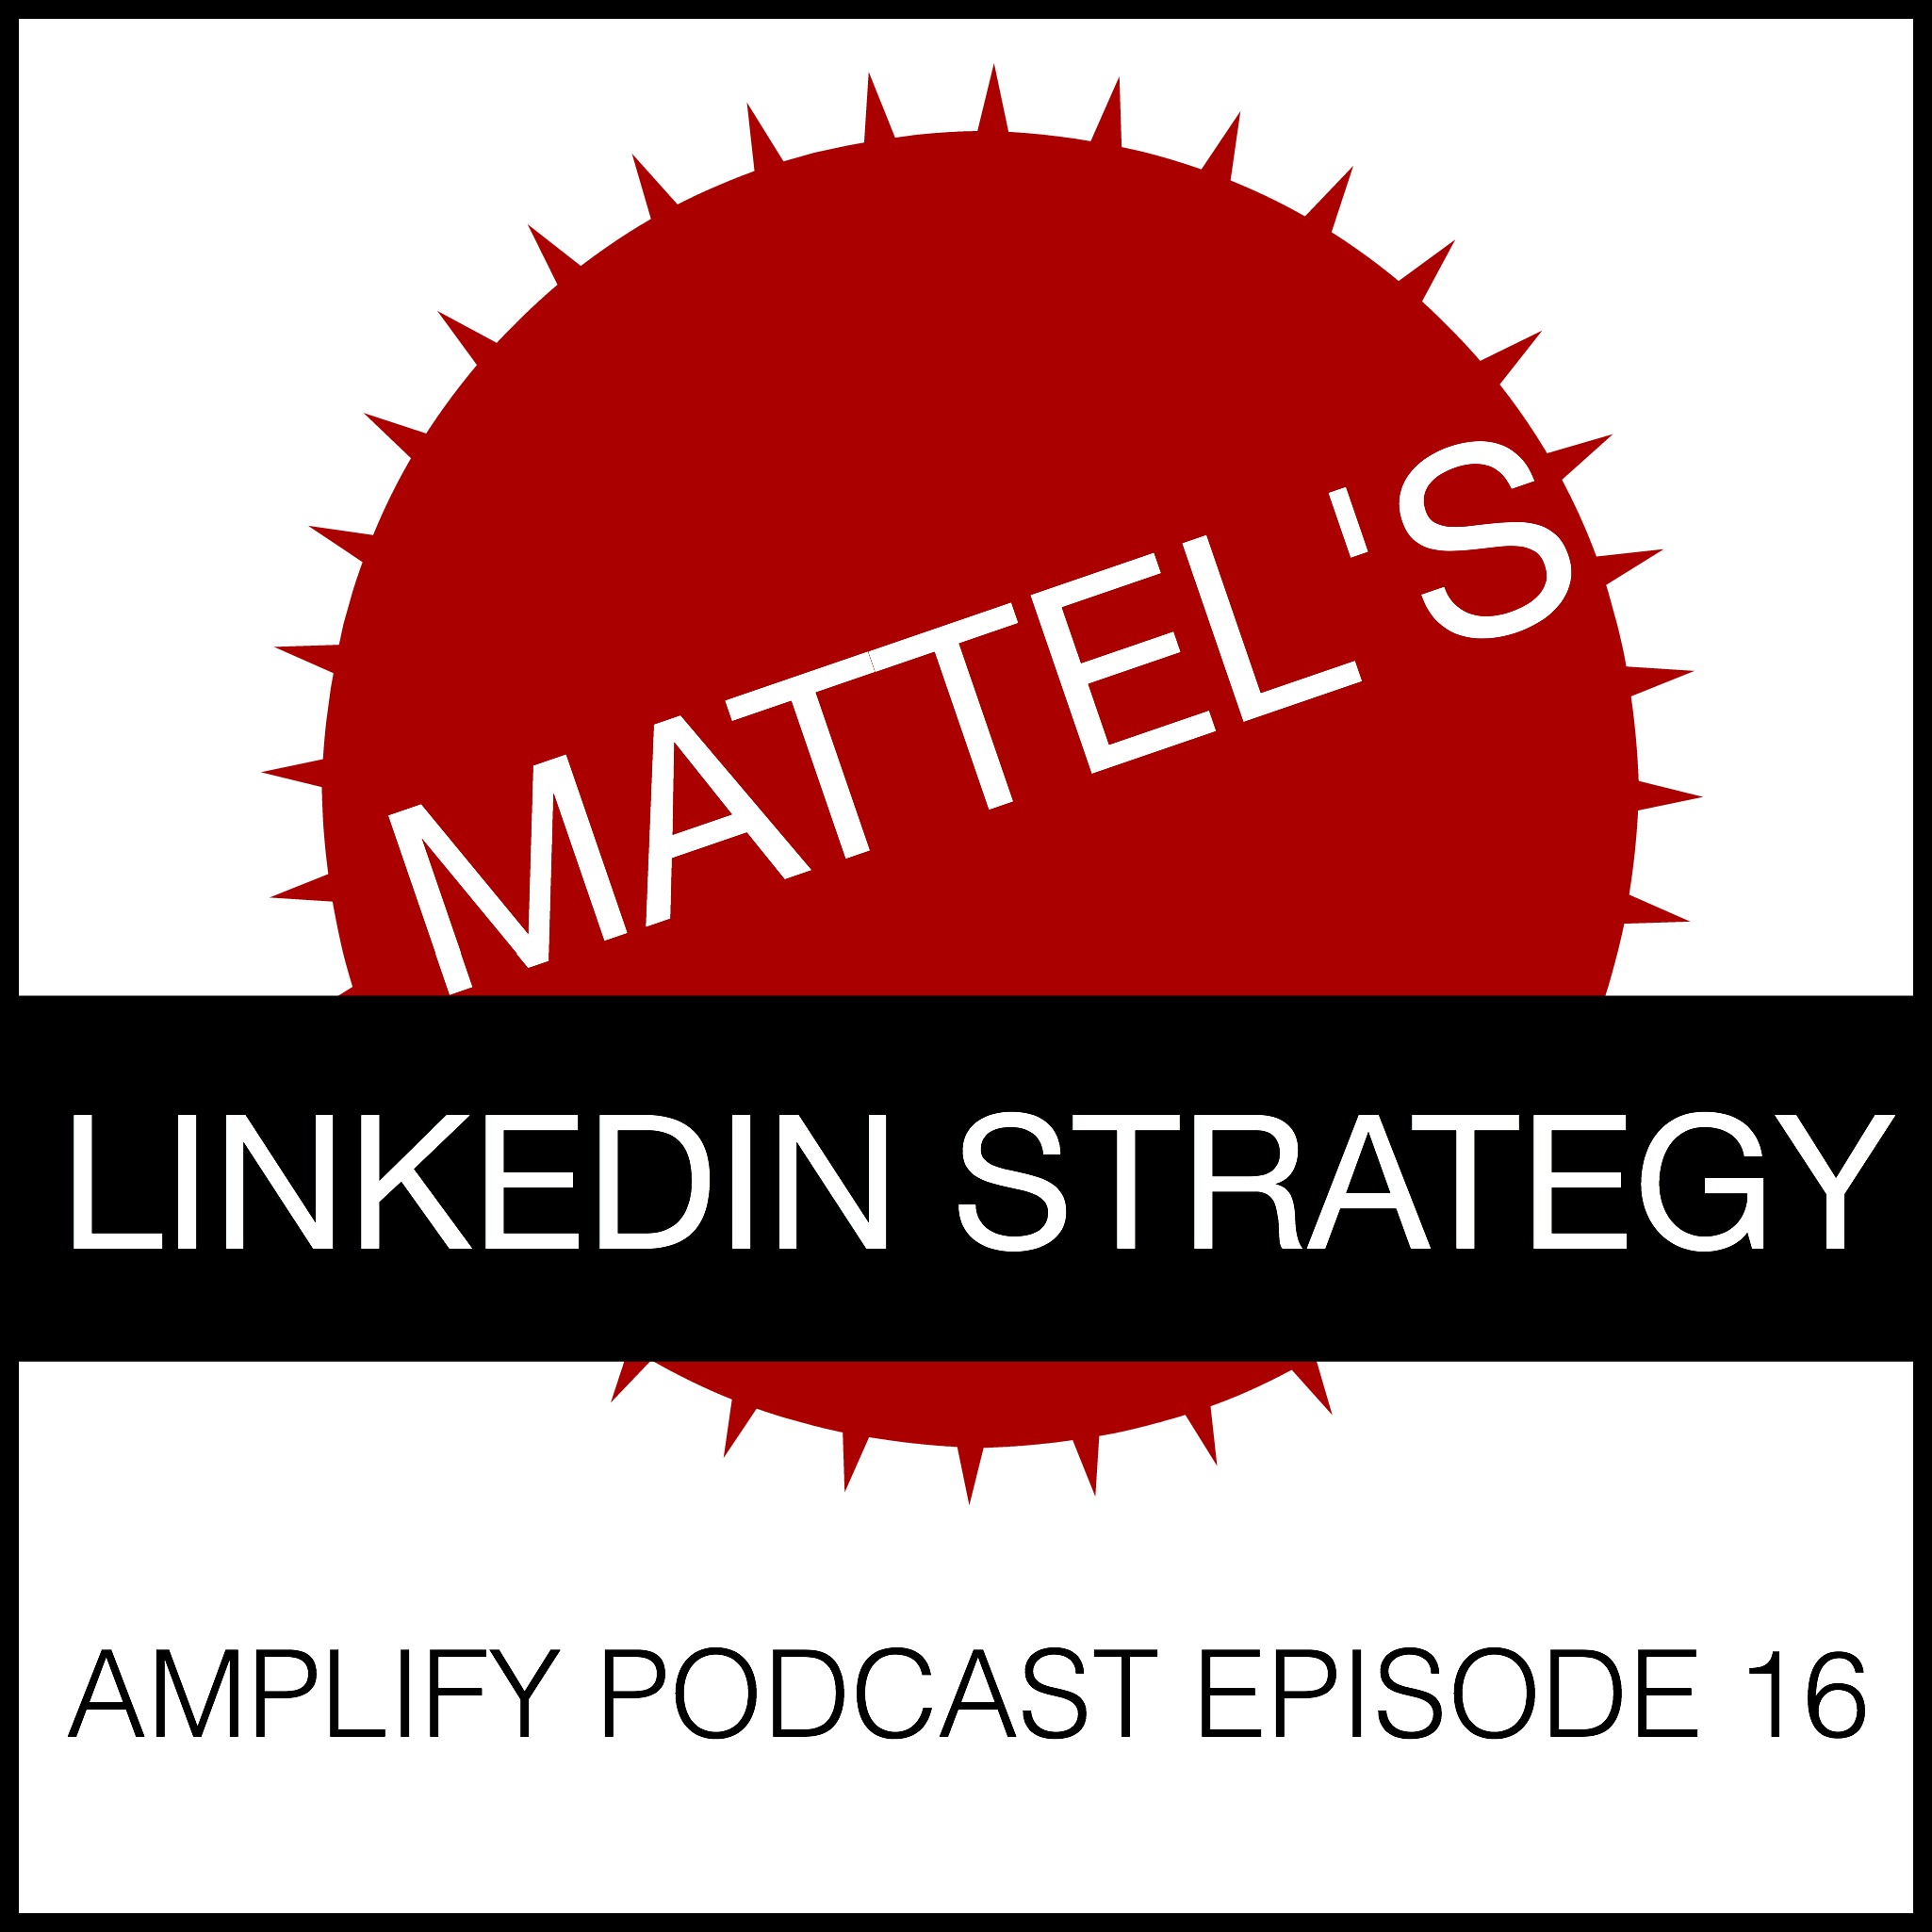 Mattel’s LinkedIn Strategy